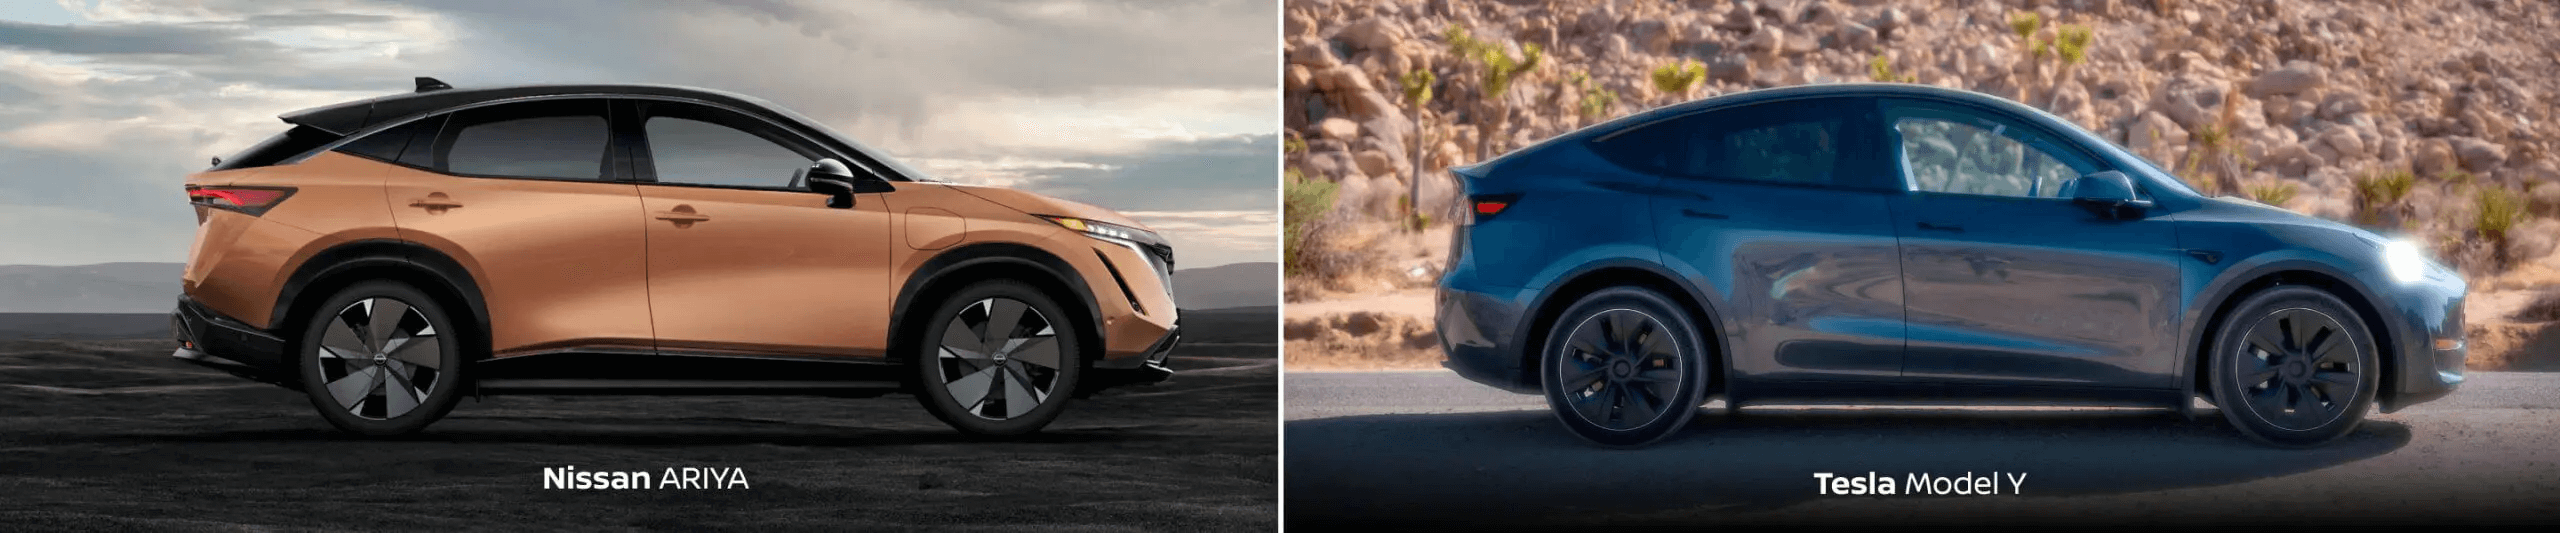 Ariya vs Tesla EV Side by Side Comparison